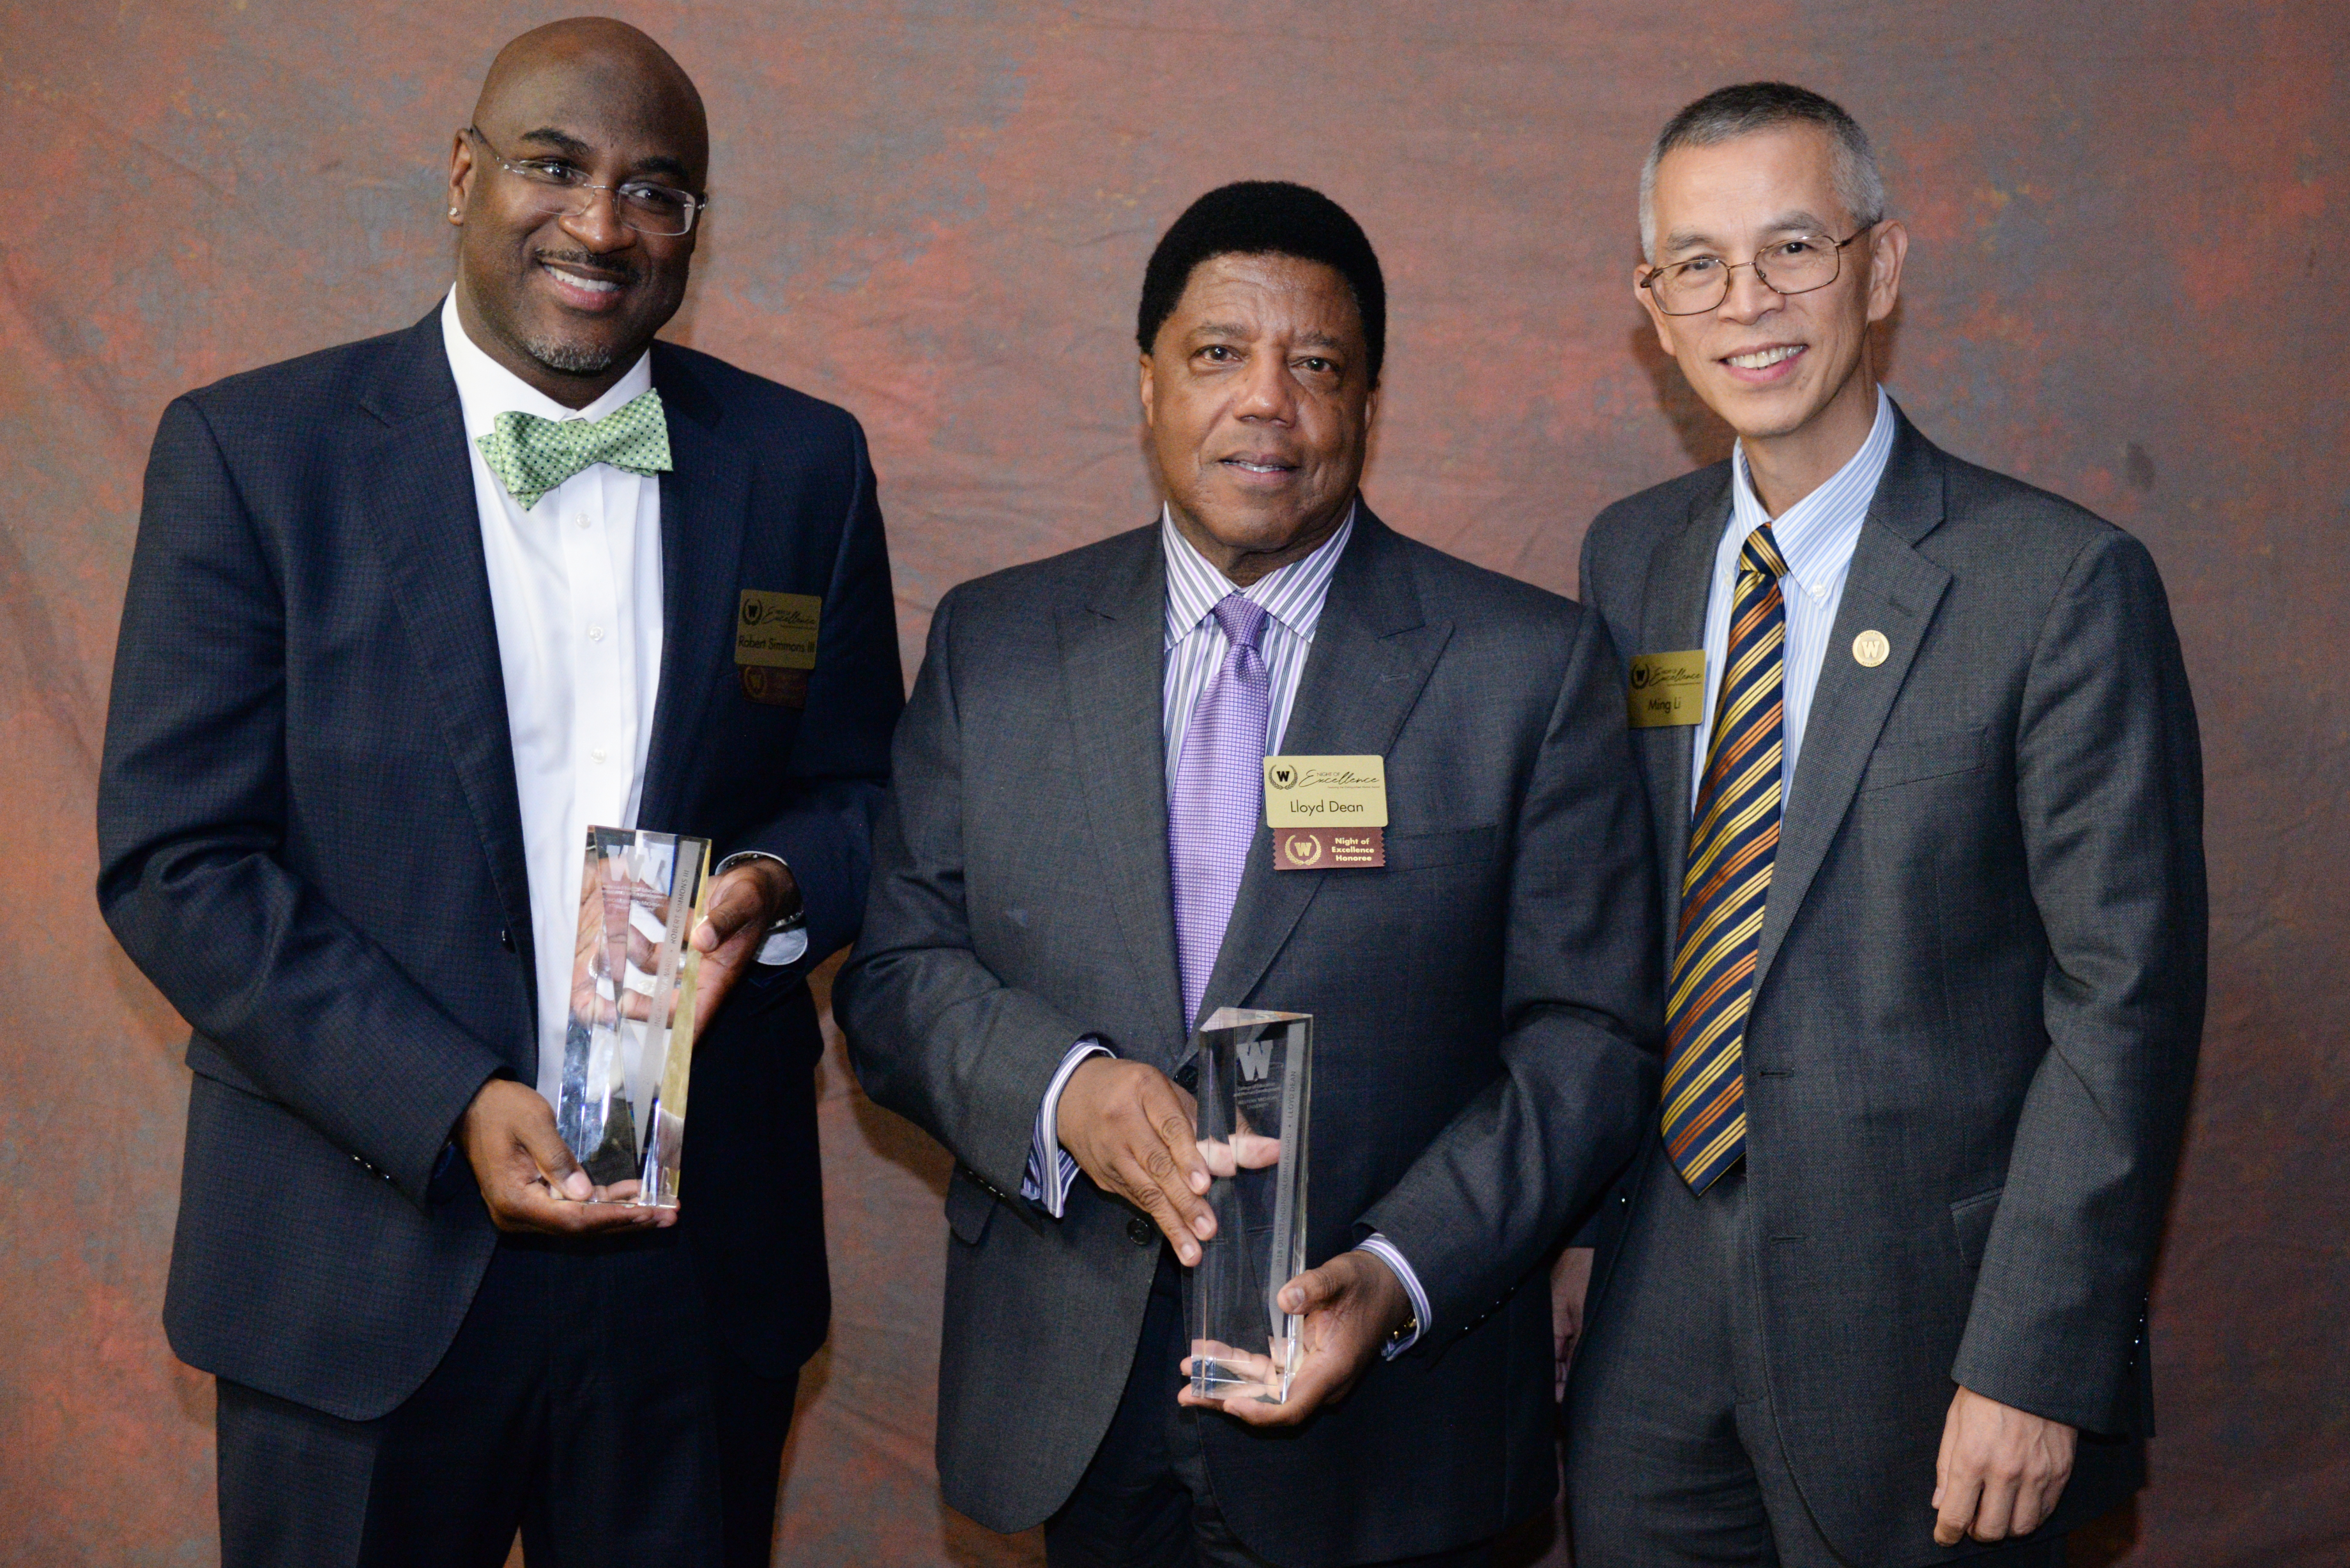 Robert Simmons III, Lloyd Dean and Ming Li with awards